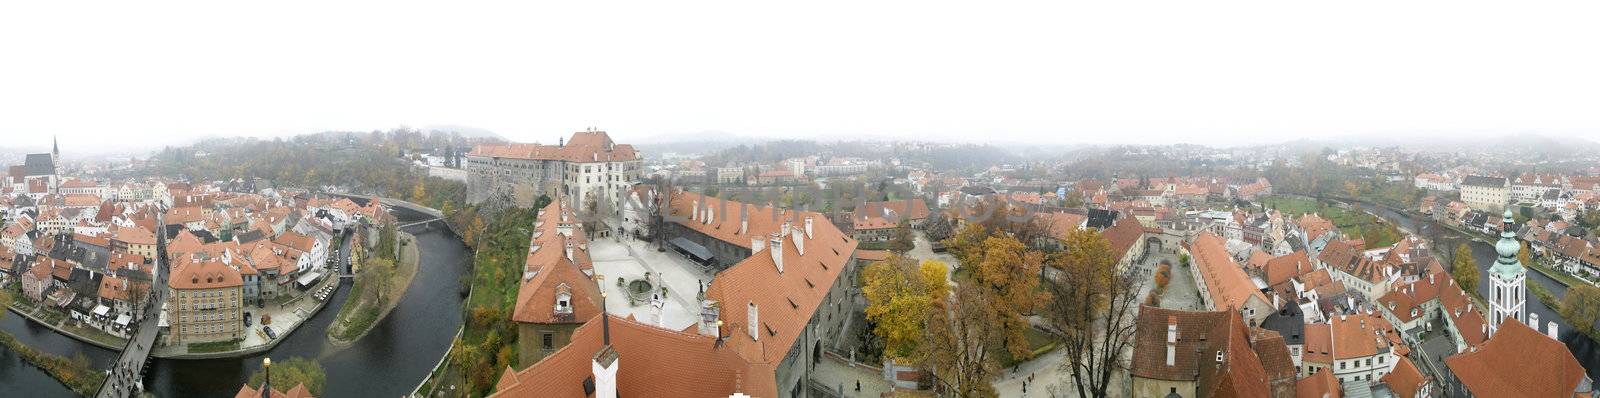 Czech City Panorama by leaf